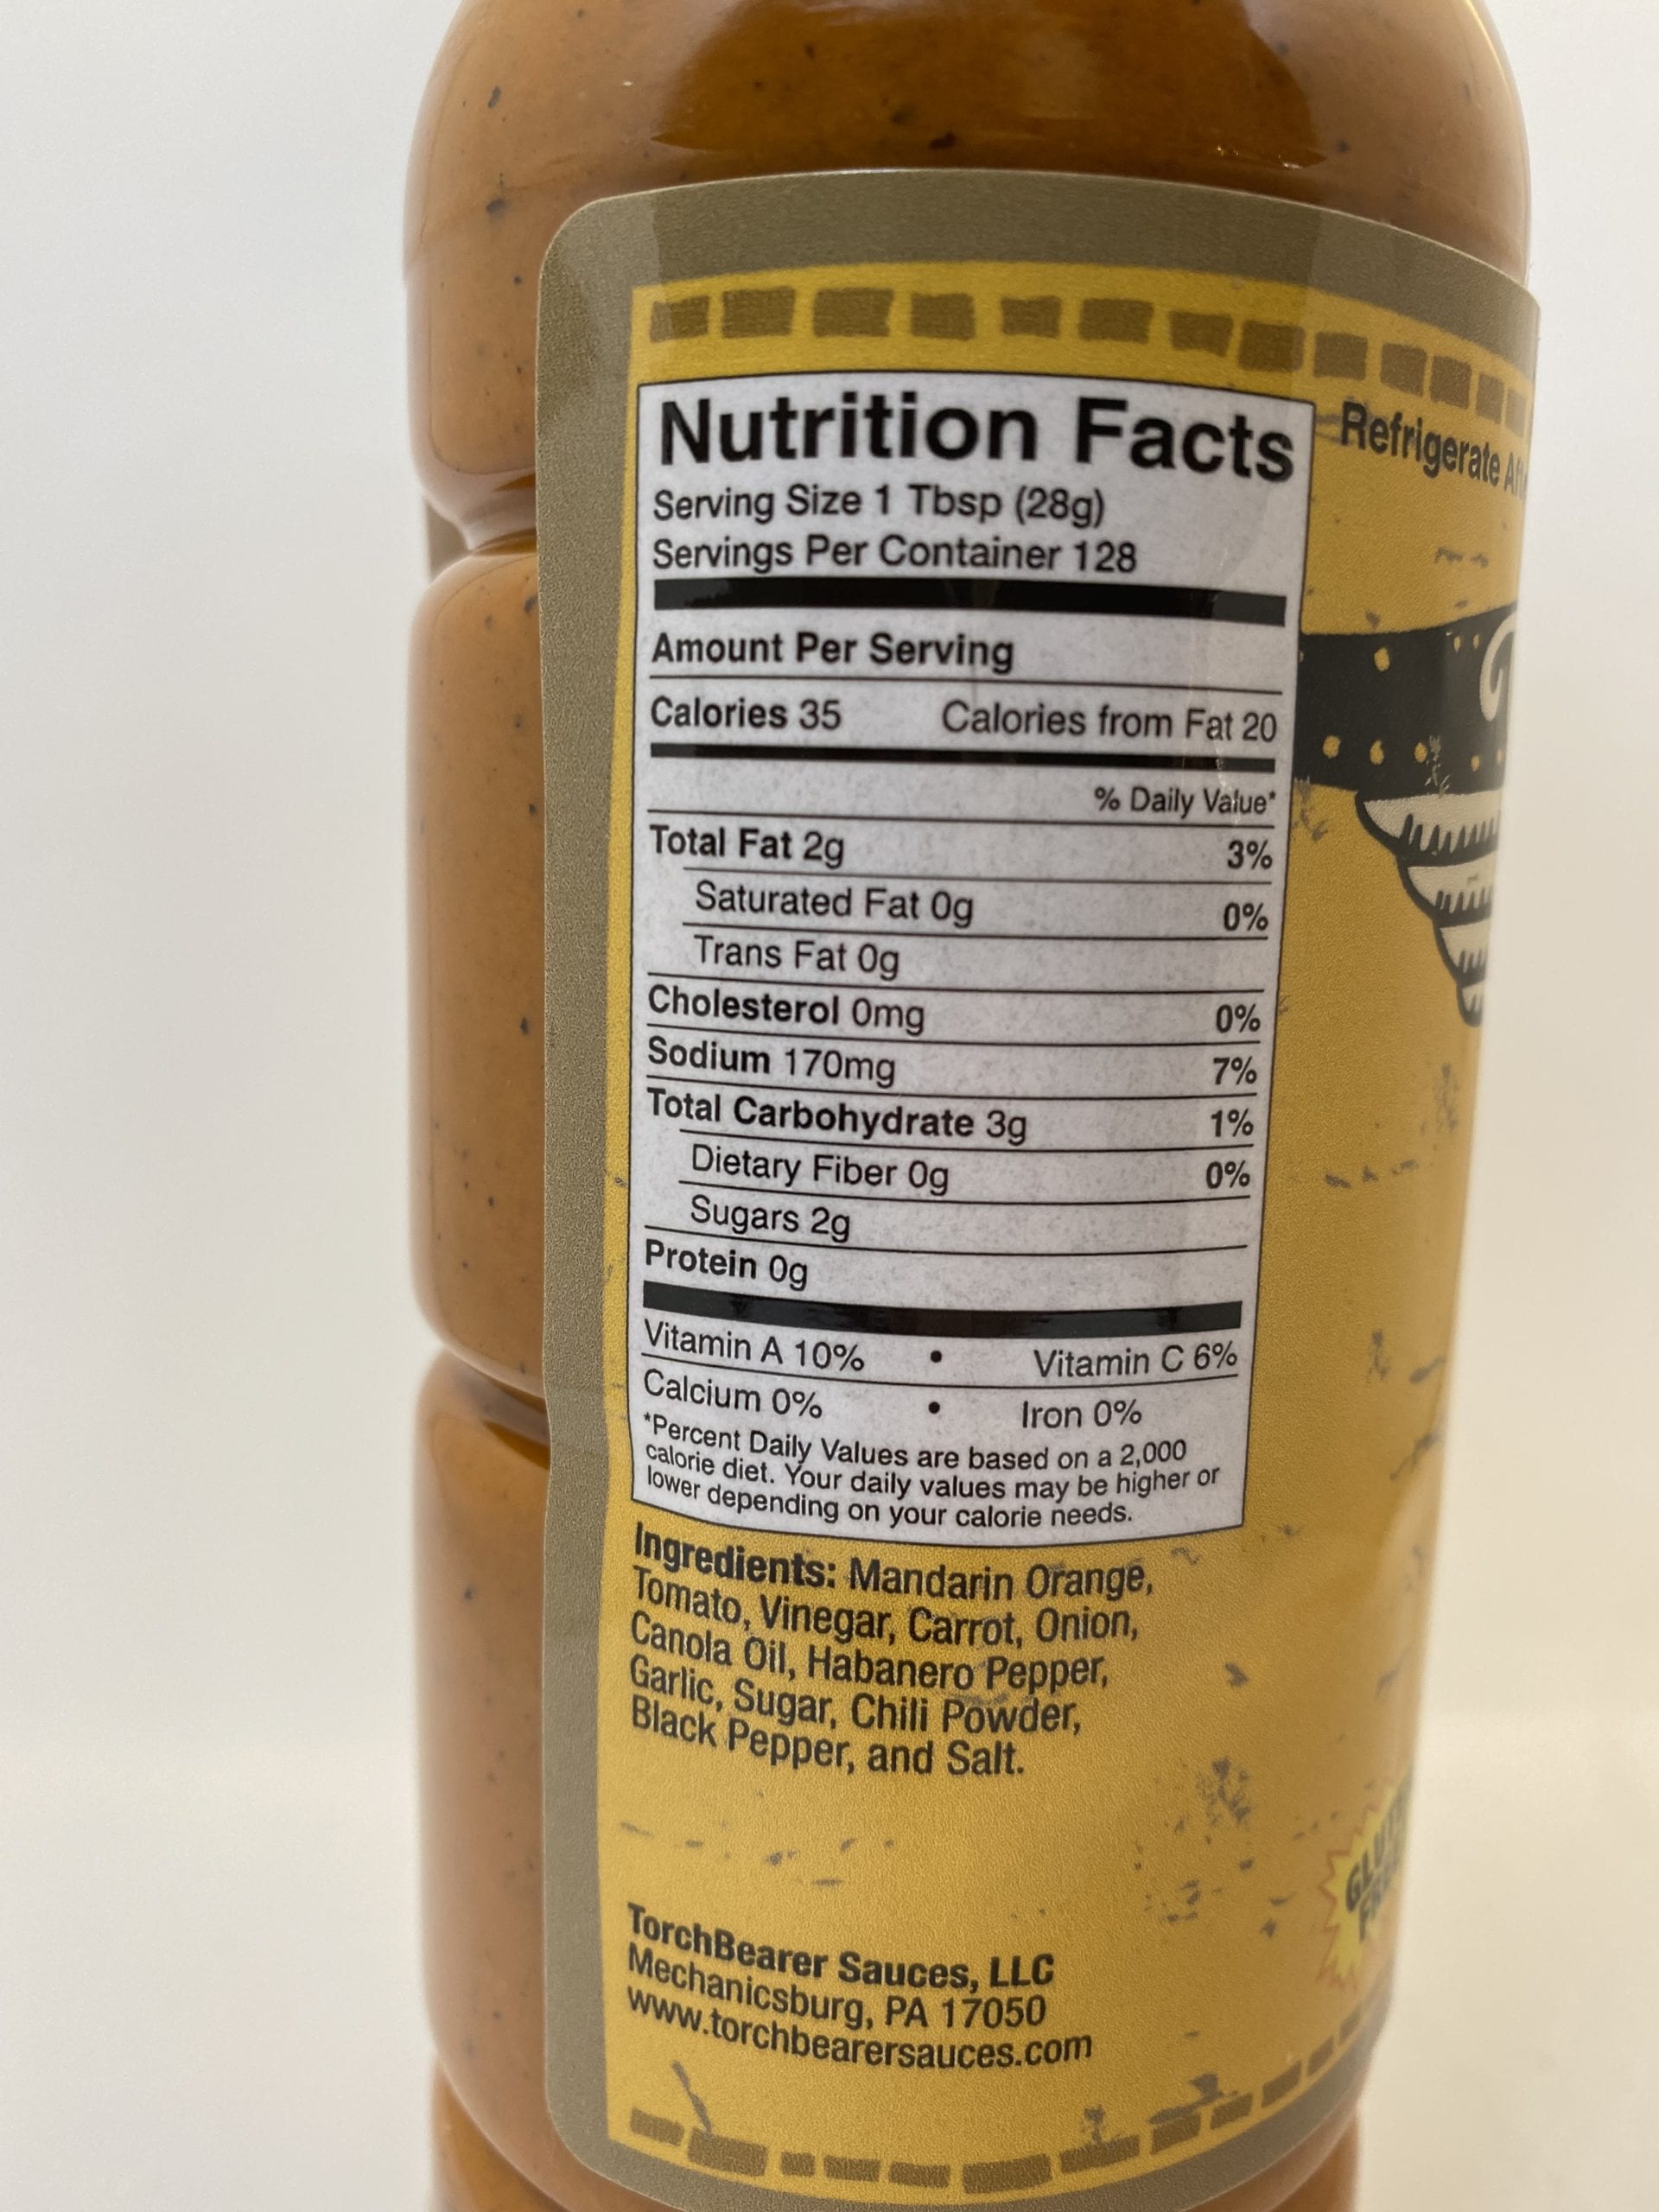 Buffalo Sauce (8.5 oz) – Mission Nutrition